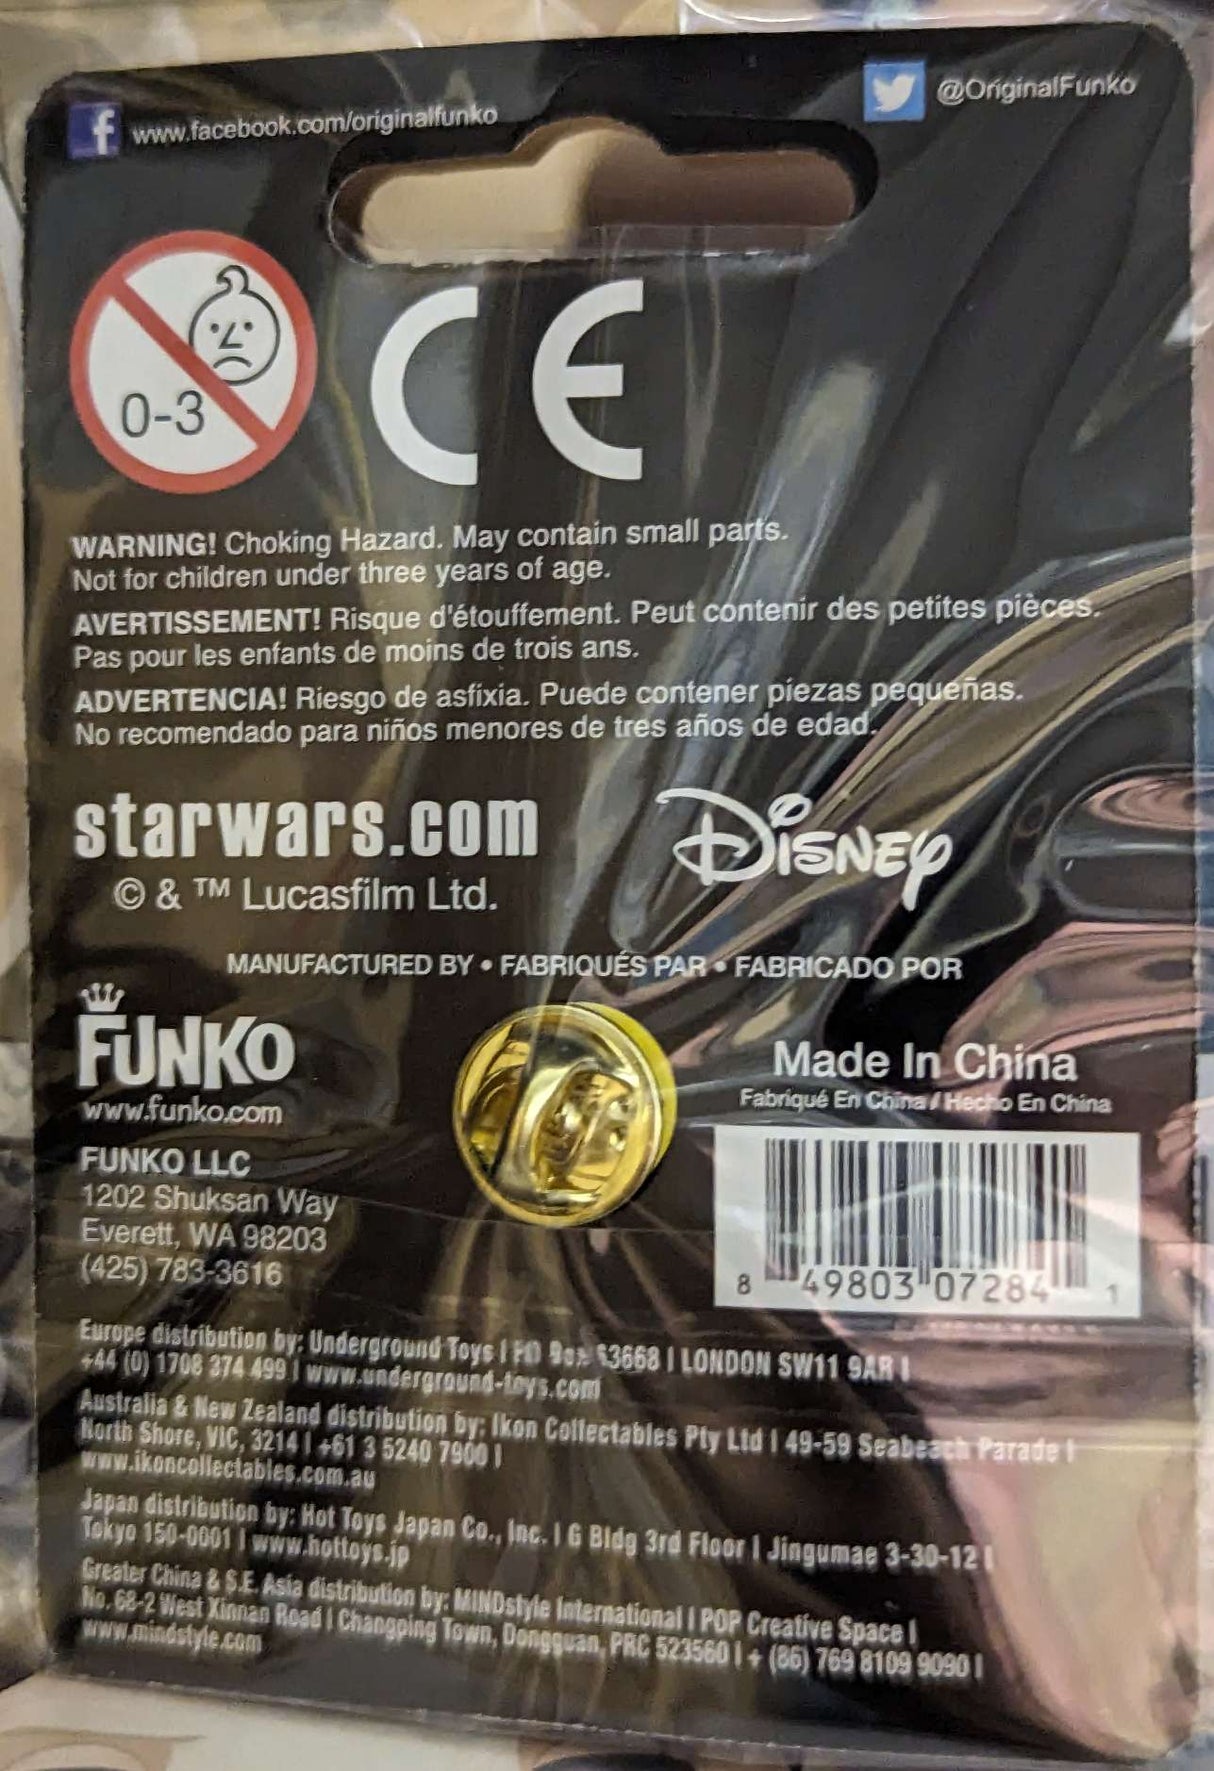 Funko Pop Pins Star Wars | C-3PO Enamel Pin Badge